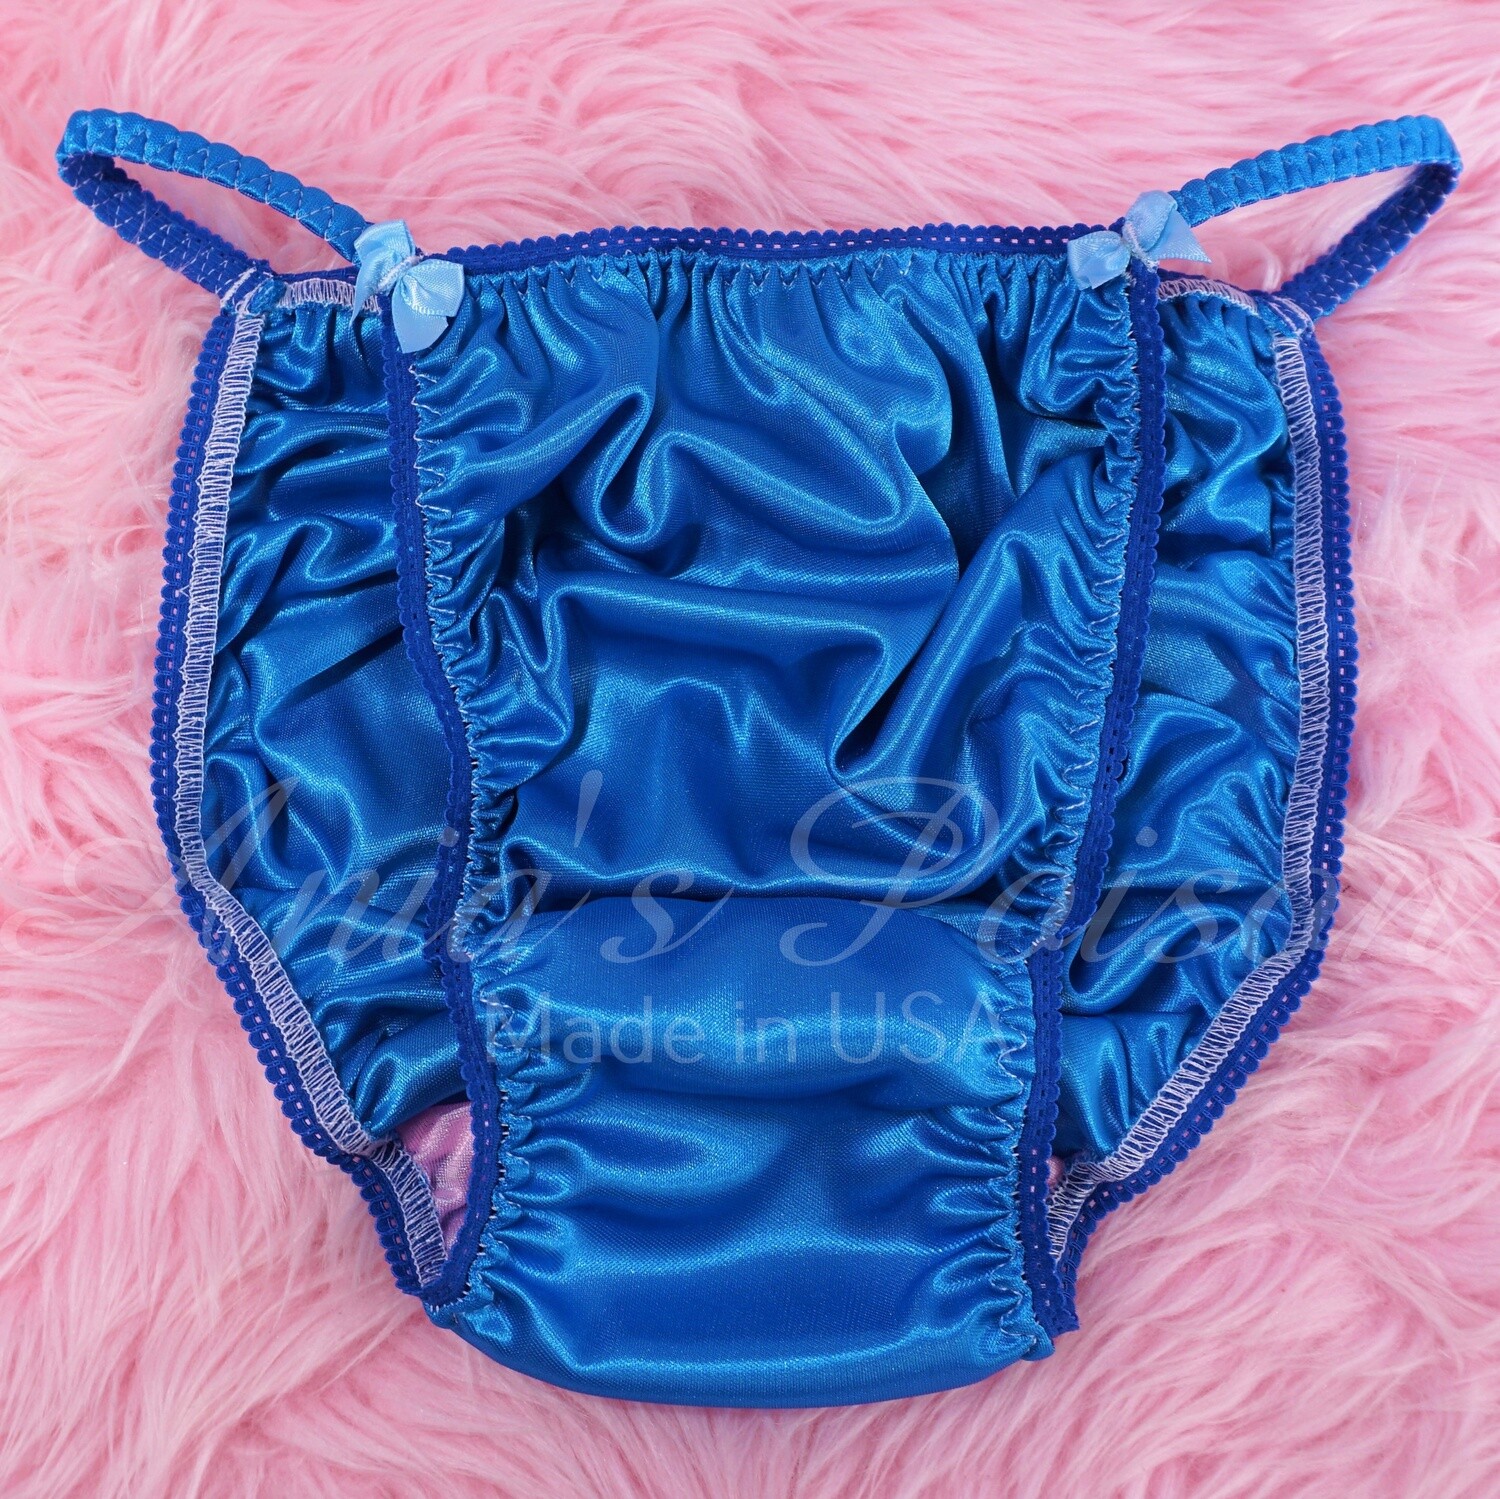 Ania's Poison MANties S - XL shiny Rare Blue Butter Soft polyester string bikini sissy mens underwear panties